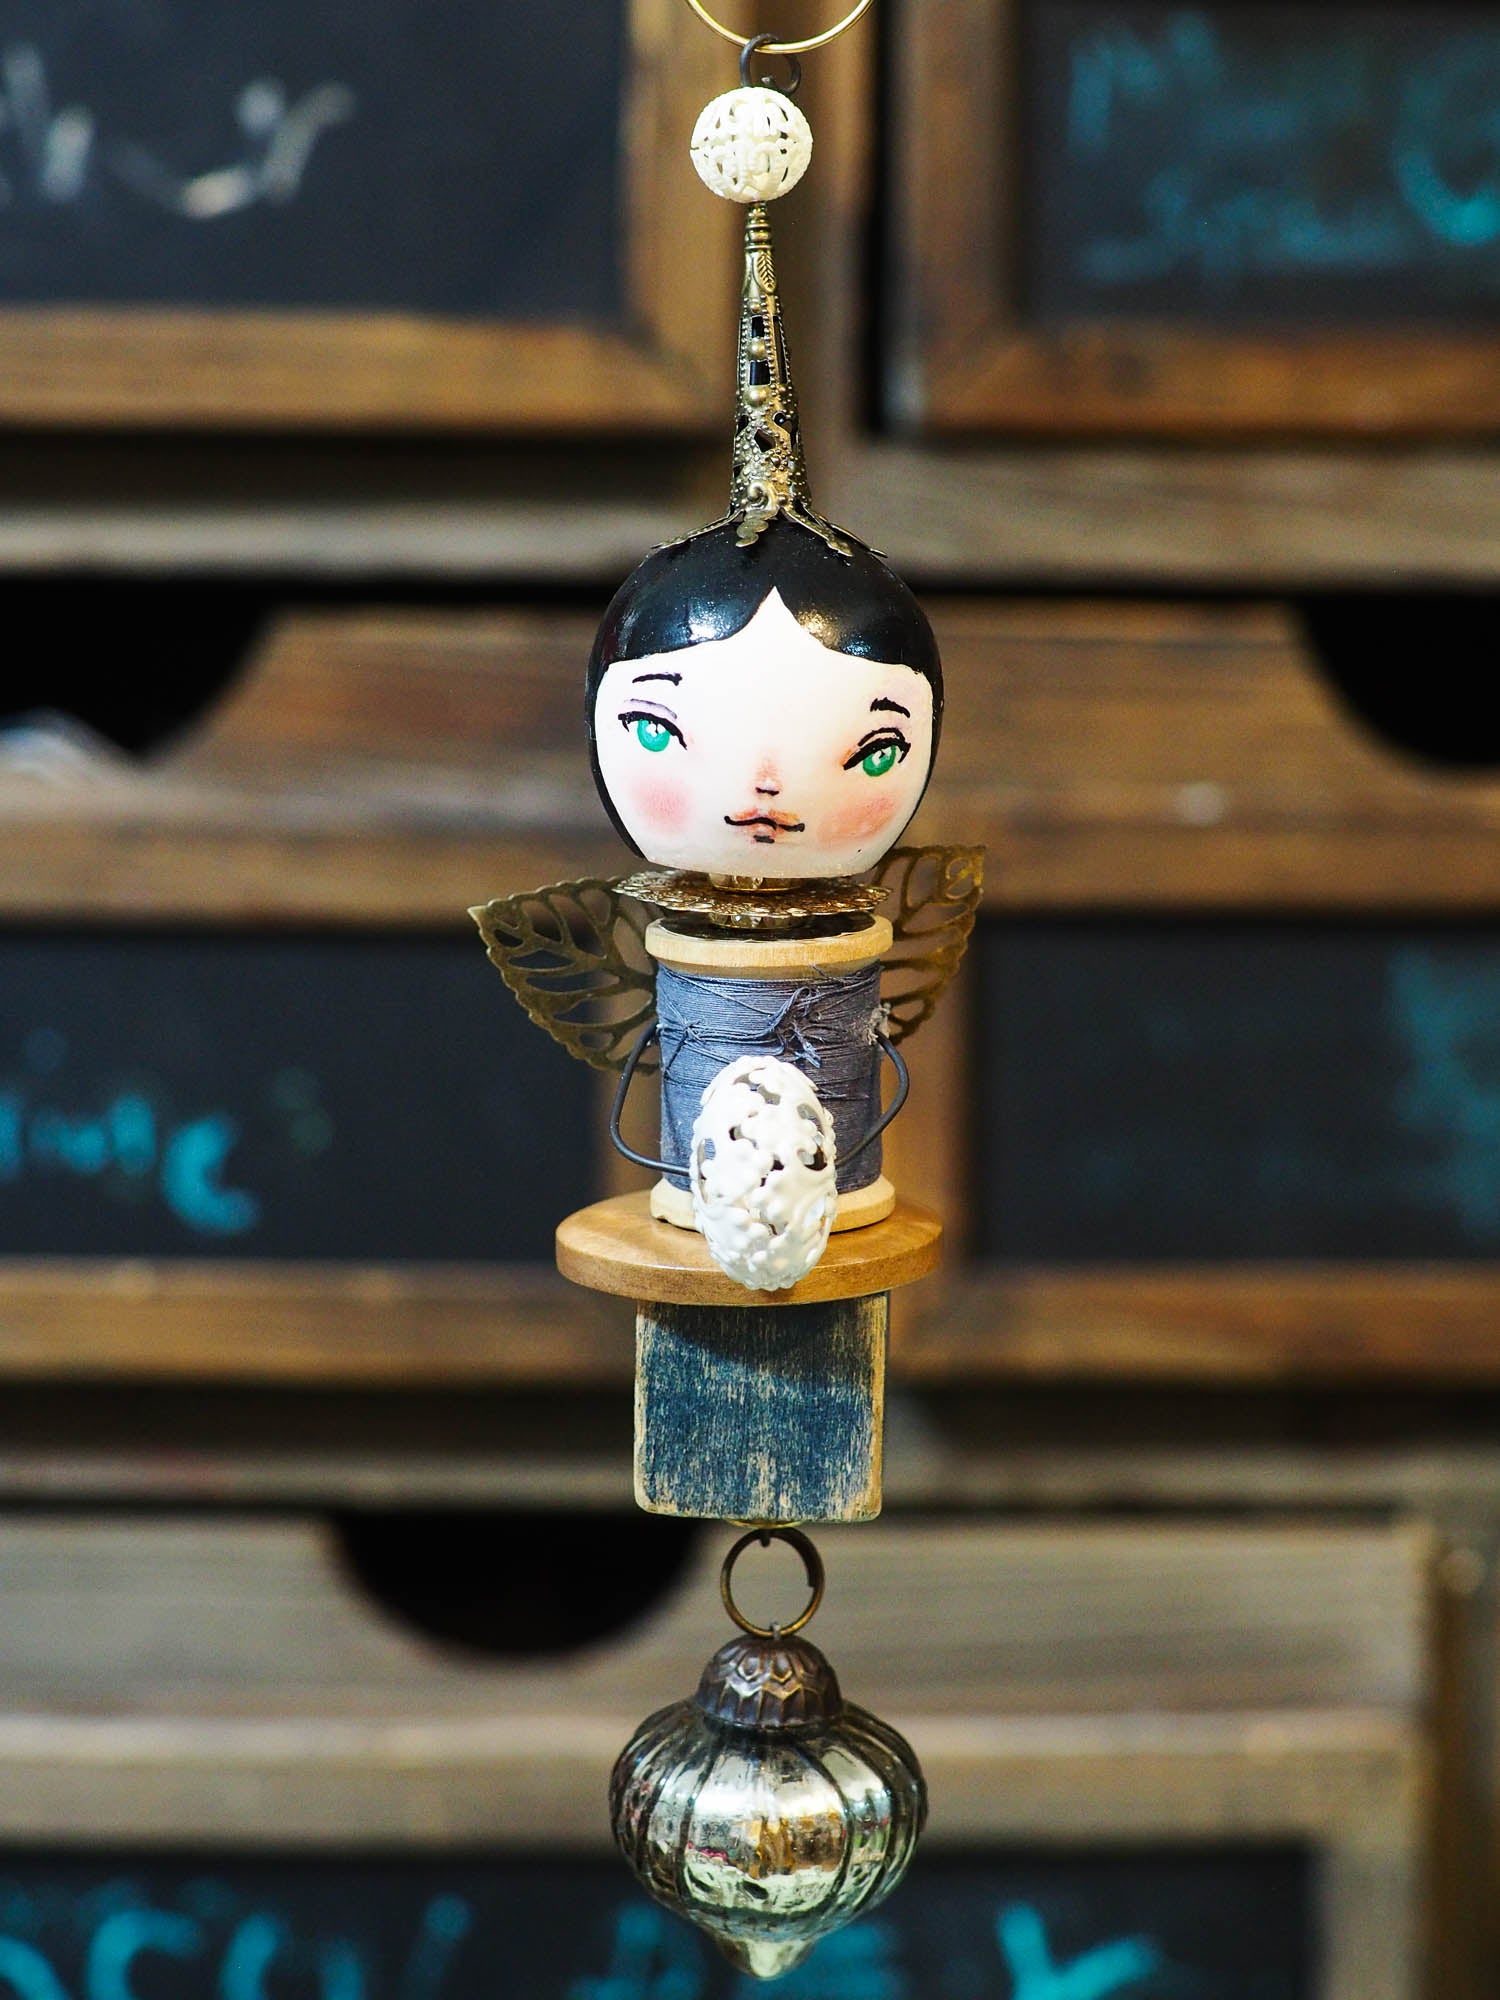 ANGEL No. 2 - An original handmade Christmas tree ornament by Danita, Miniature Dolls by Danita Art